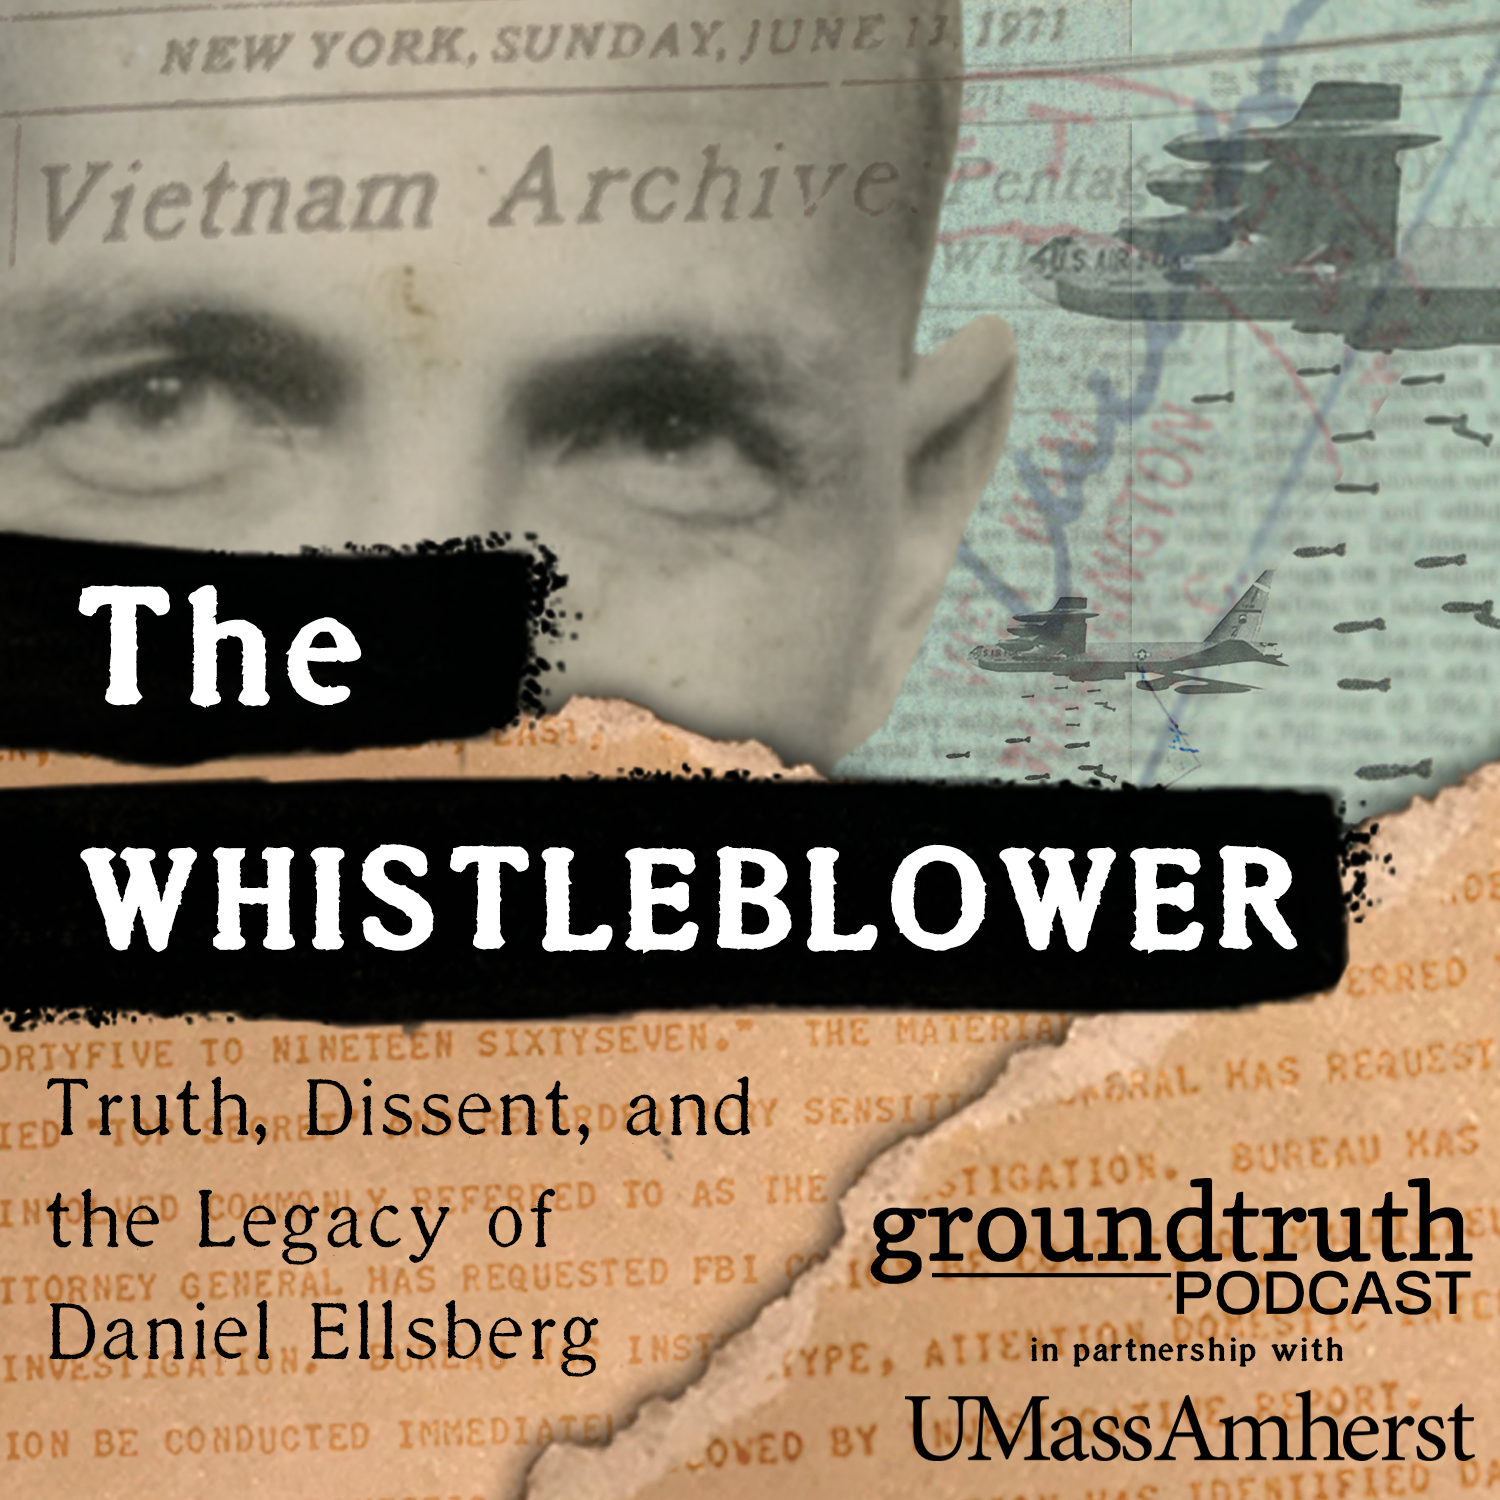 The Whistleblower - Episode 1: The Lying Machine